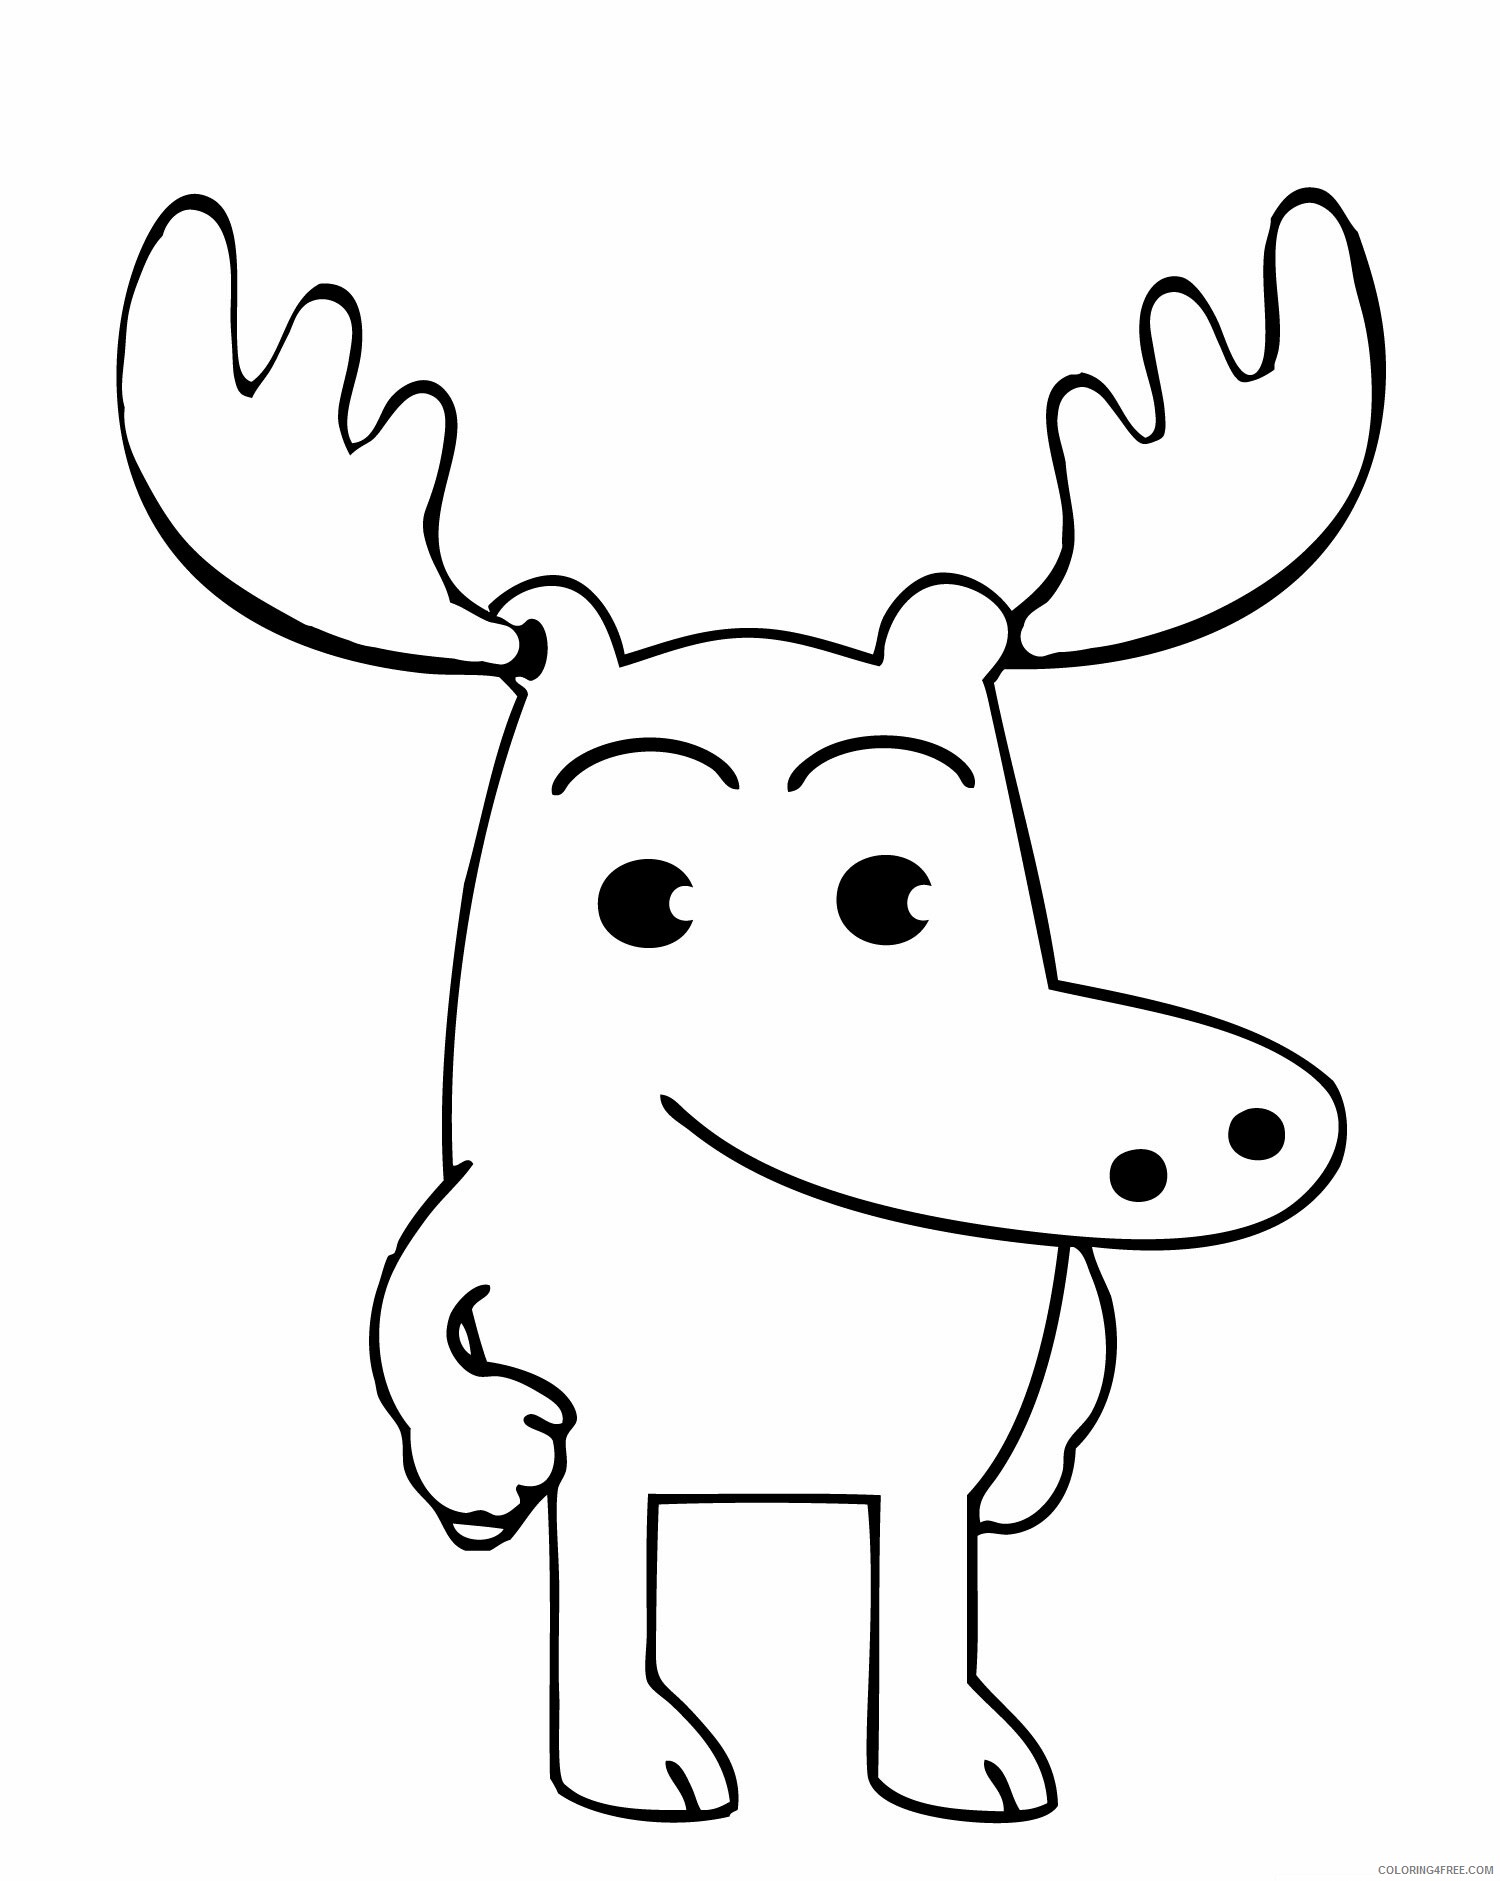 Moose Coloring Pages Animal Printable Sheets Free Moose 2021 3368 Coloring4free